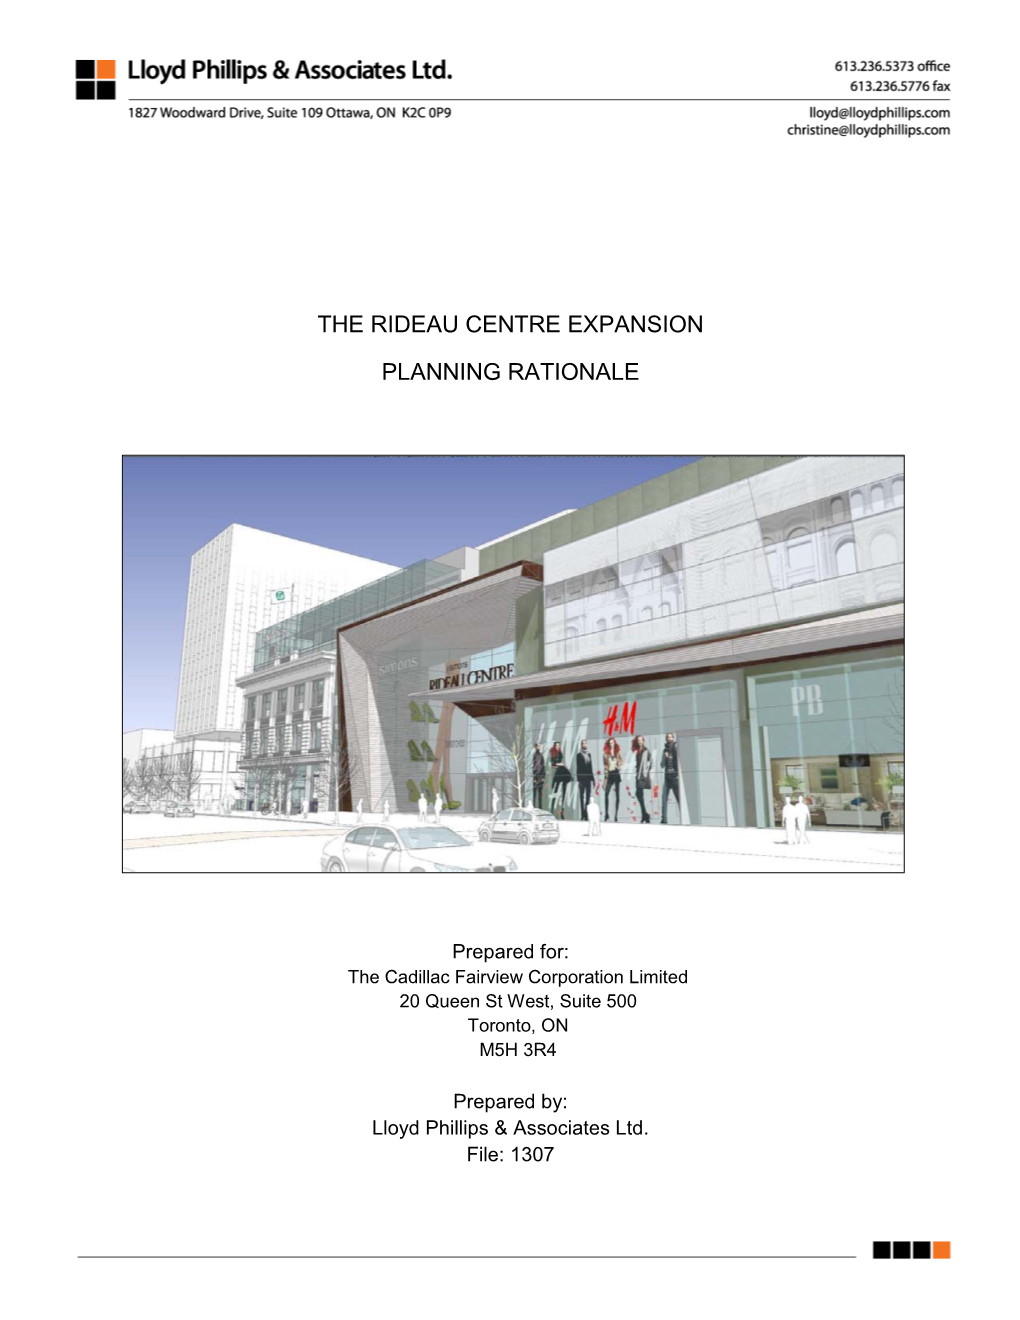 The Rideau Centre Expansion Planning Rationale